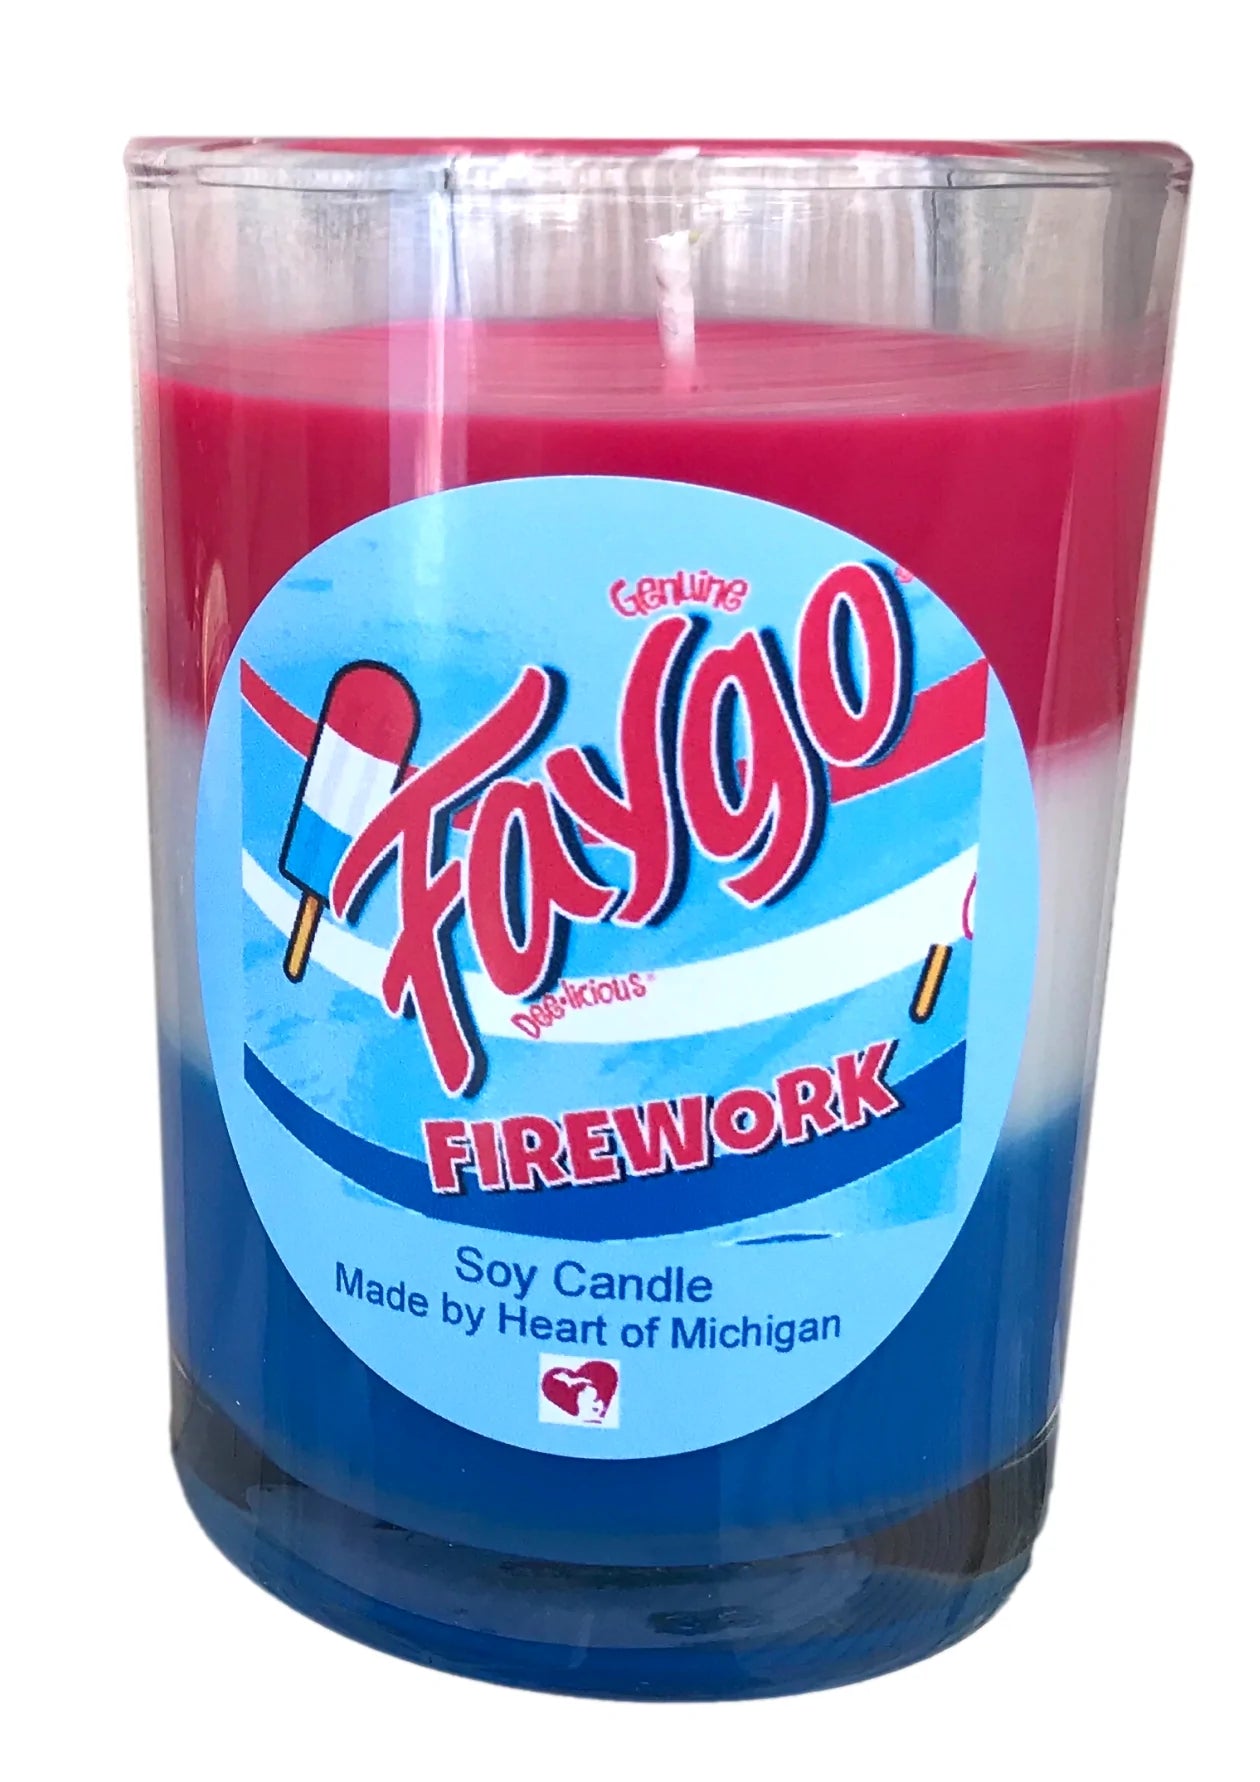 Faygo Firework Candle